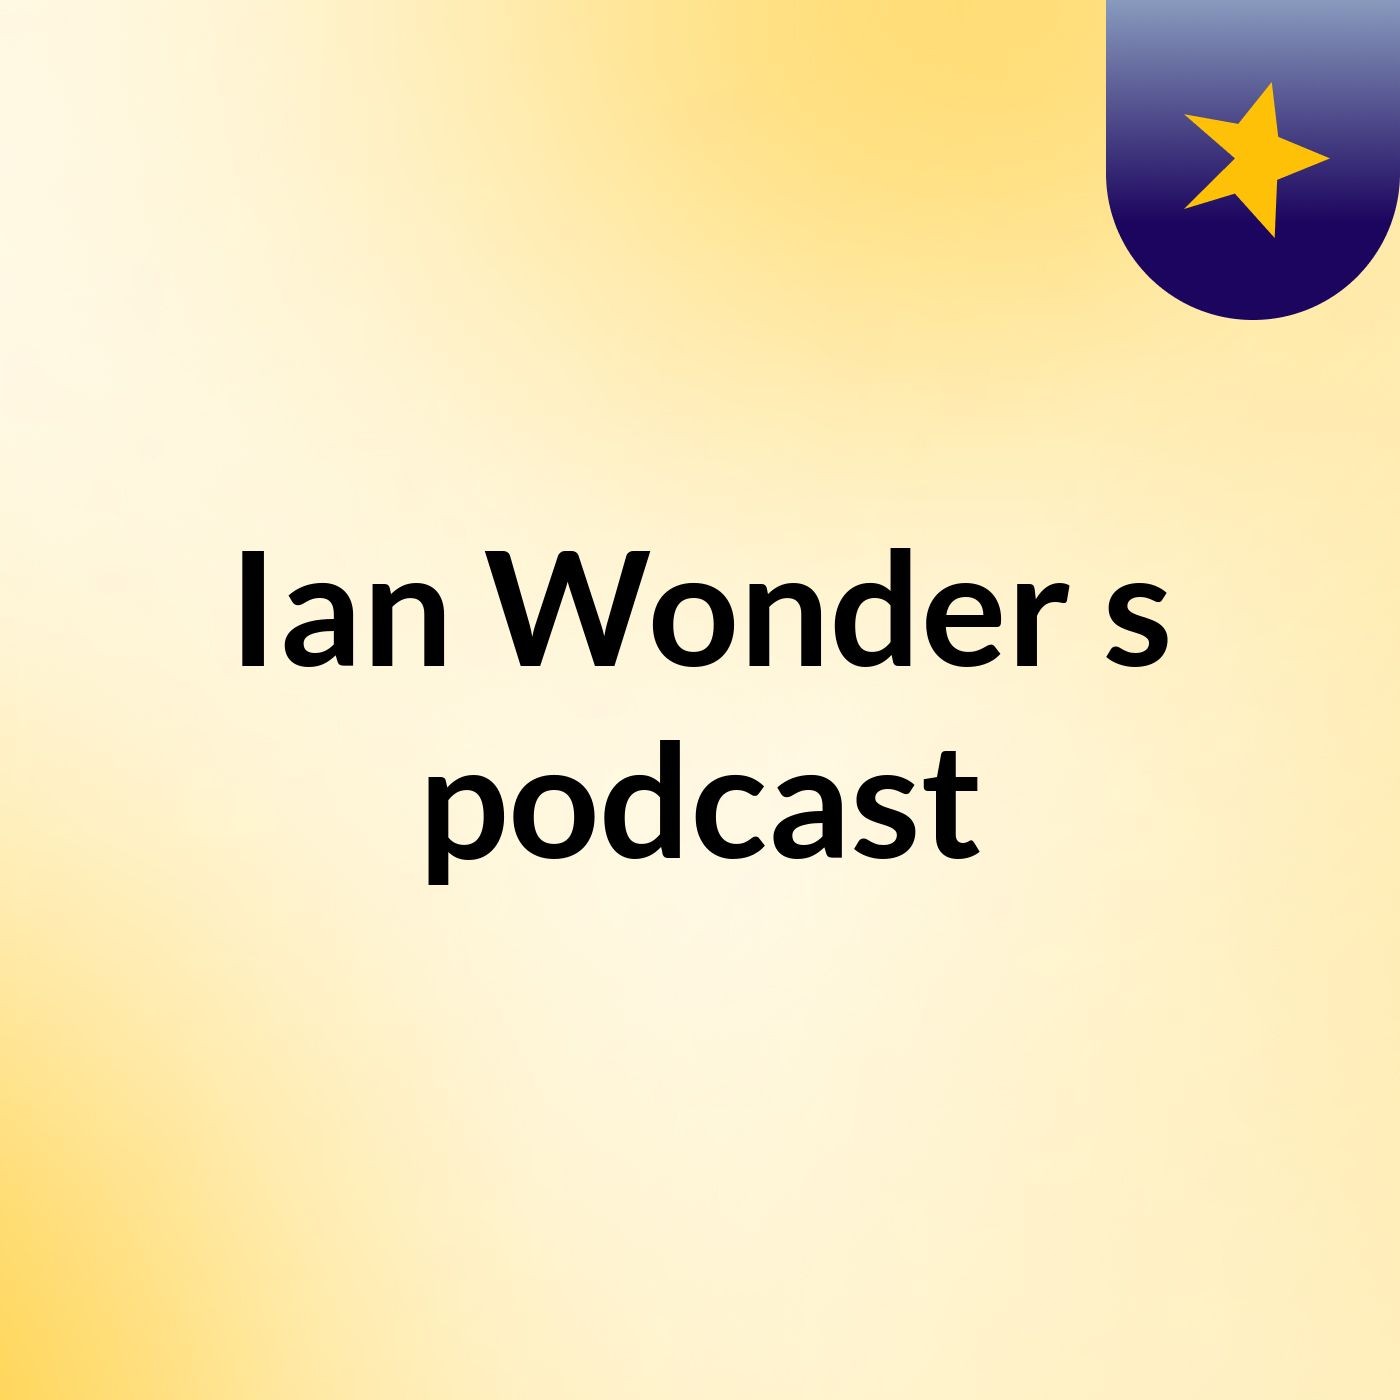 Ian Wonder's podcast